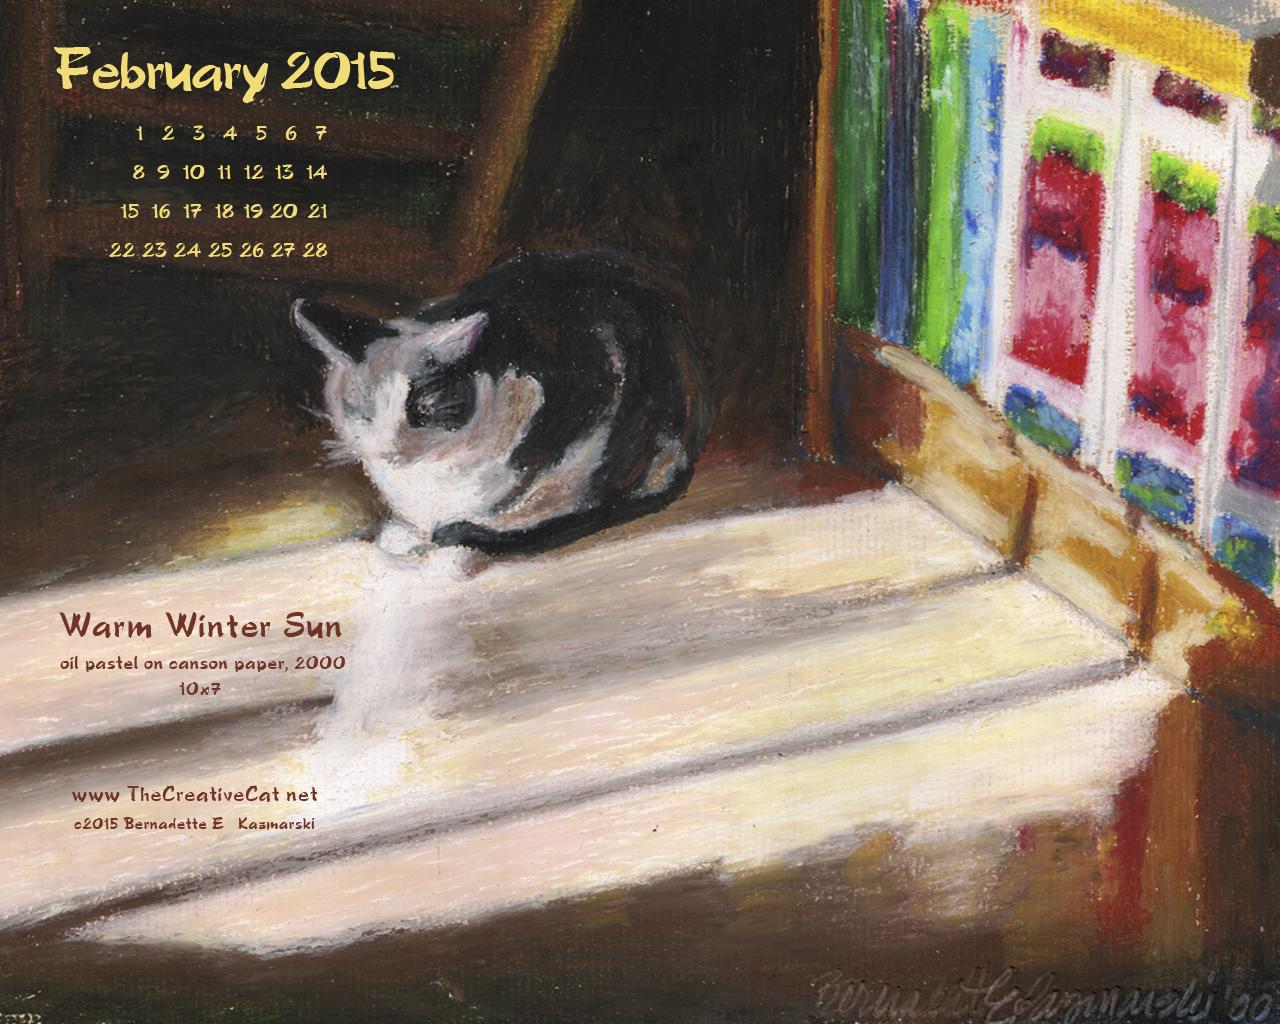  "Warm Winter Sun" desktop calendar, 1280 x 1024 for square and laptop monitors